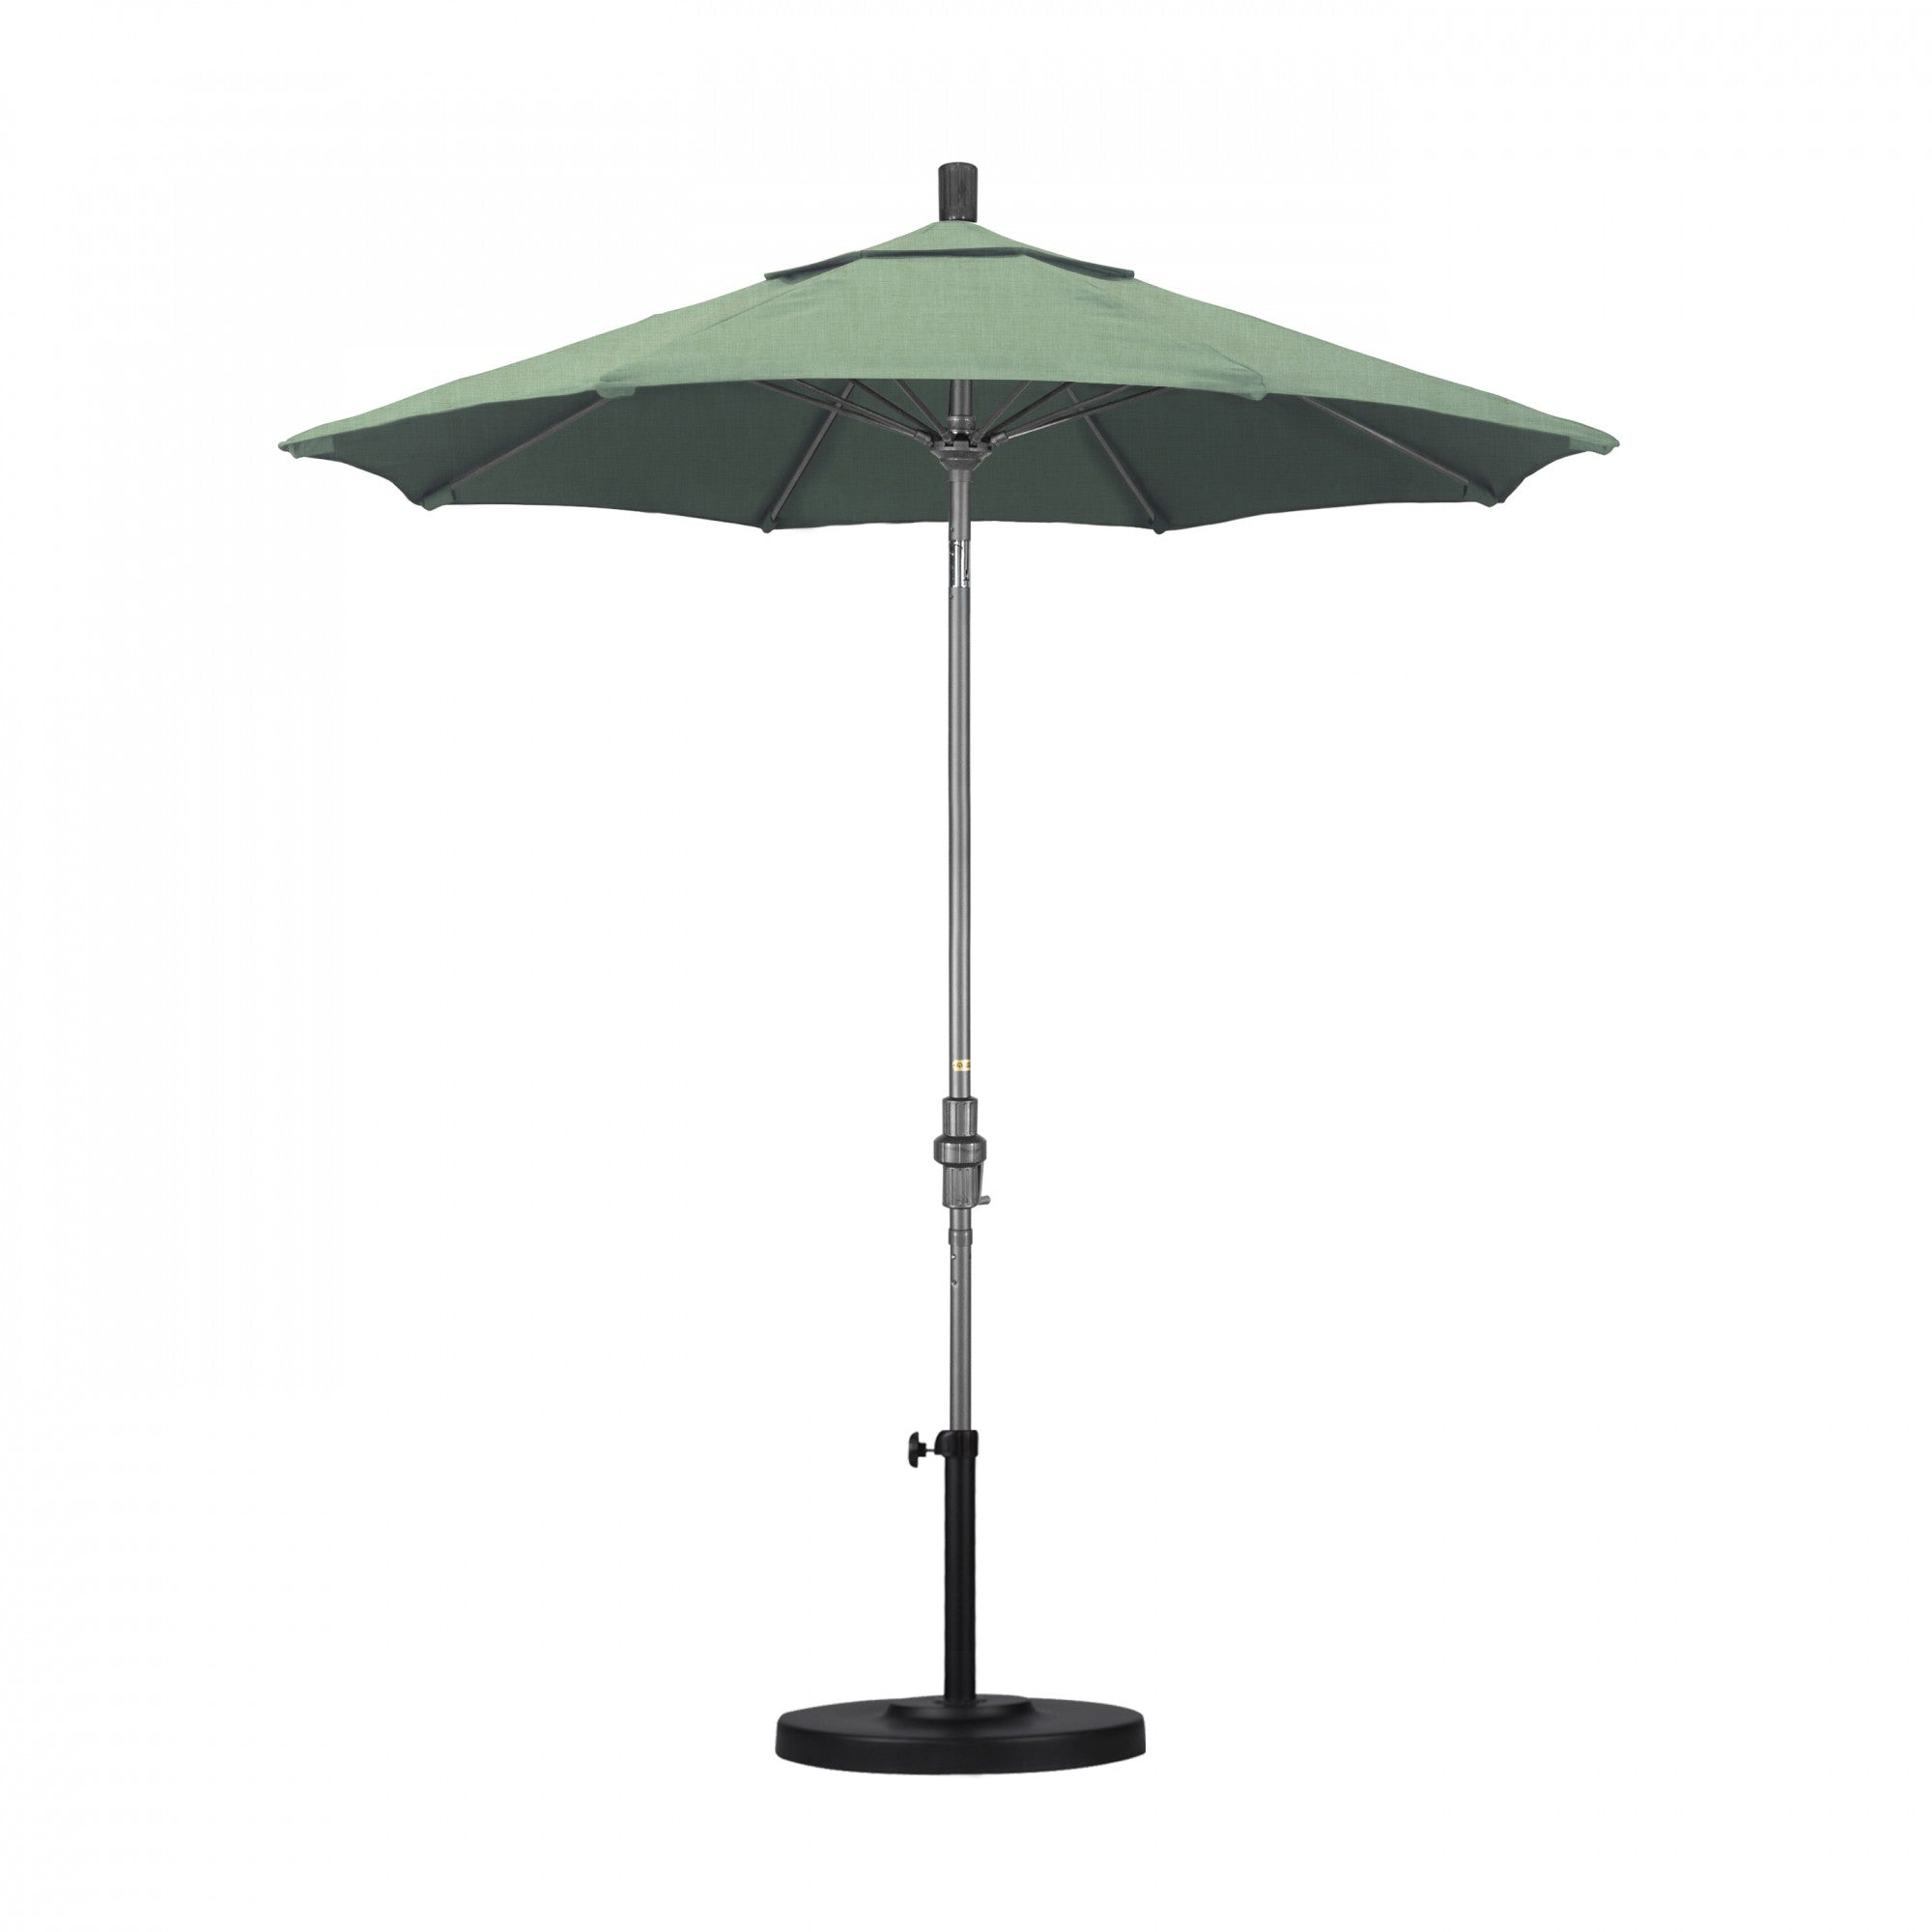 California Umbrella - 7.5' - Patio Umbrella Umbrella - Aluminum Pole - Spa - Pacifica - GSCUF758010-SA13